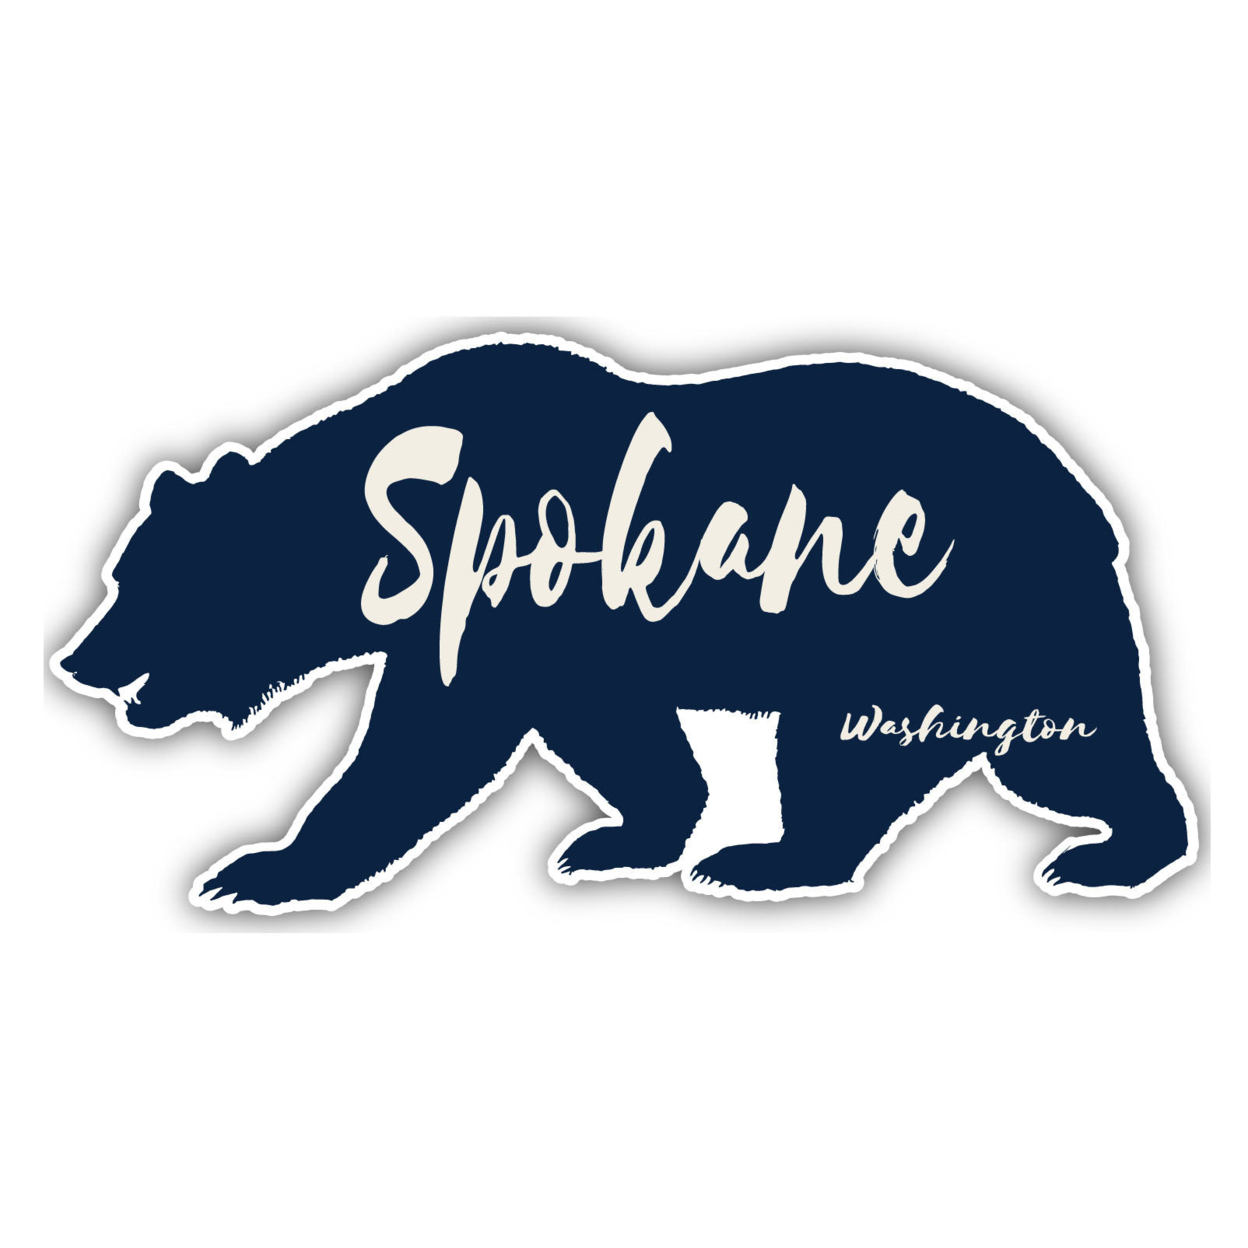 Spokane Washington Souvenir Decorative Stickers (Choose Theme And Size) - Single Unit, 4-Inch, Tent